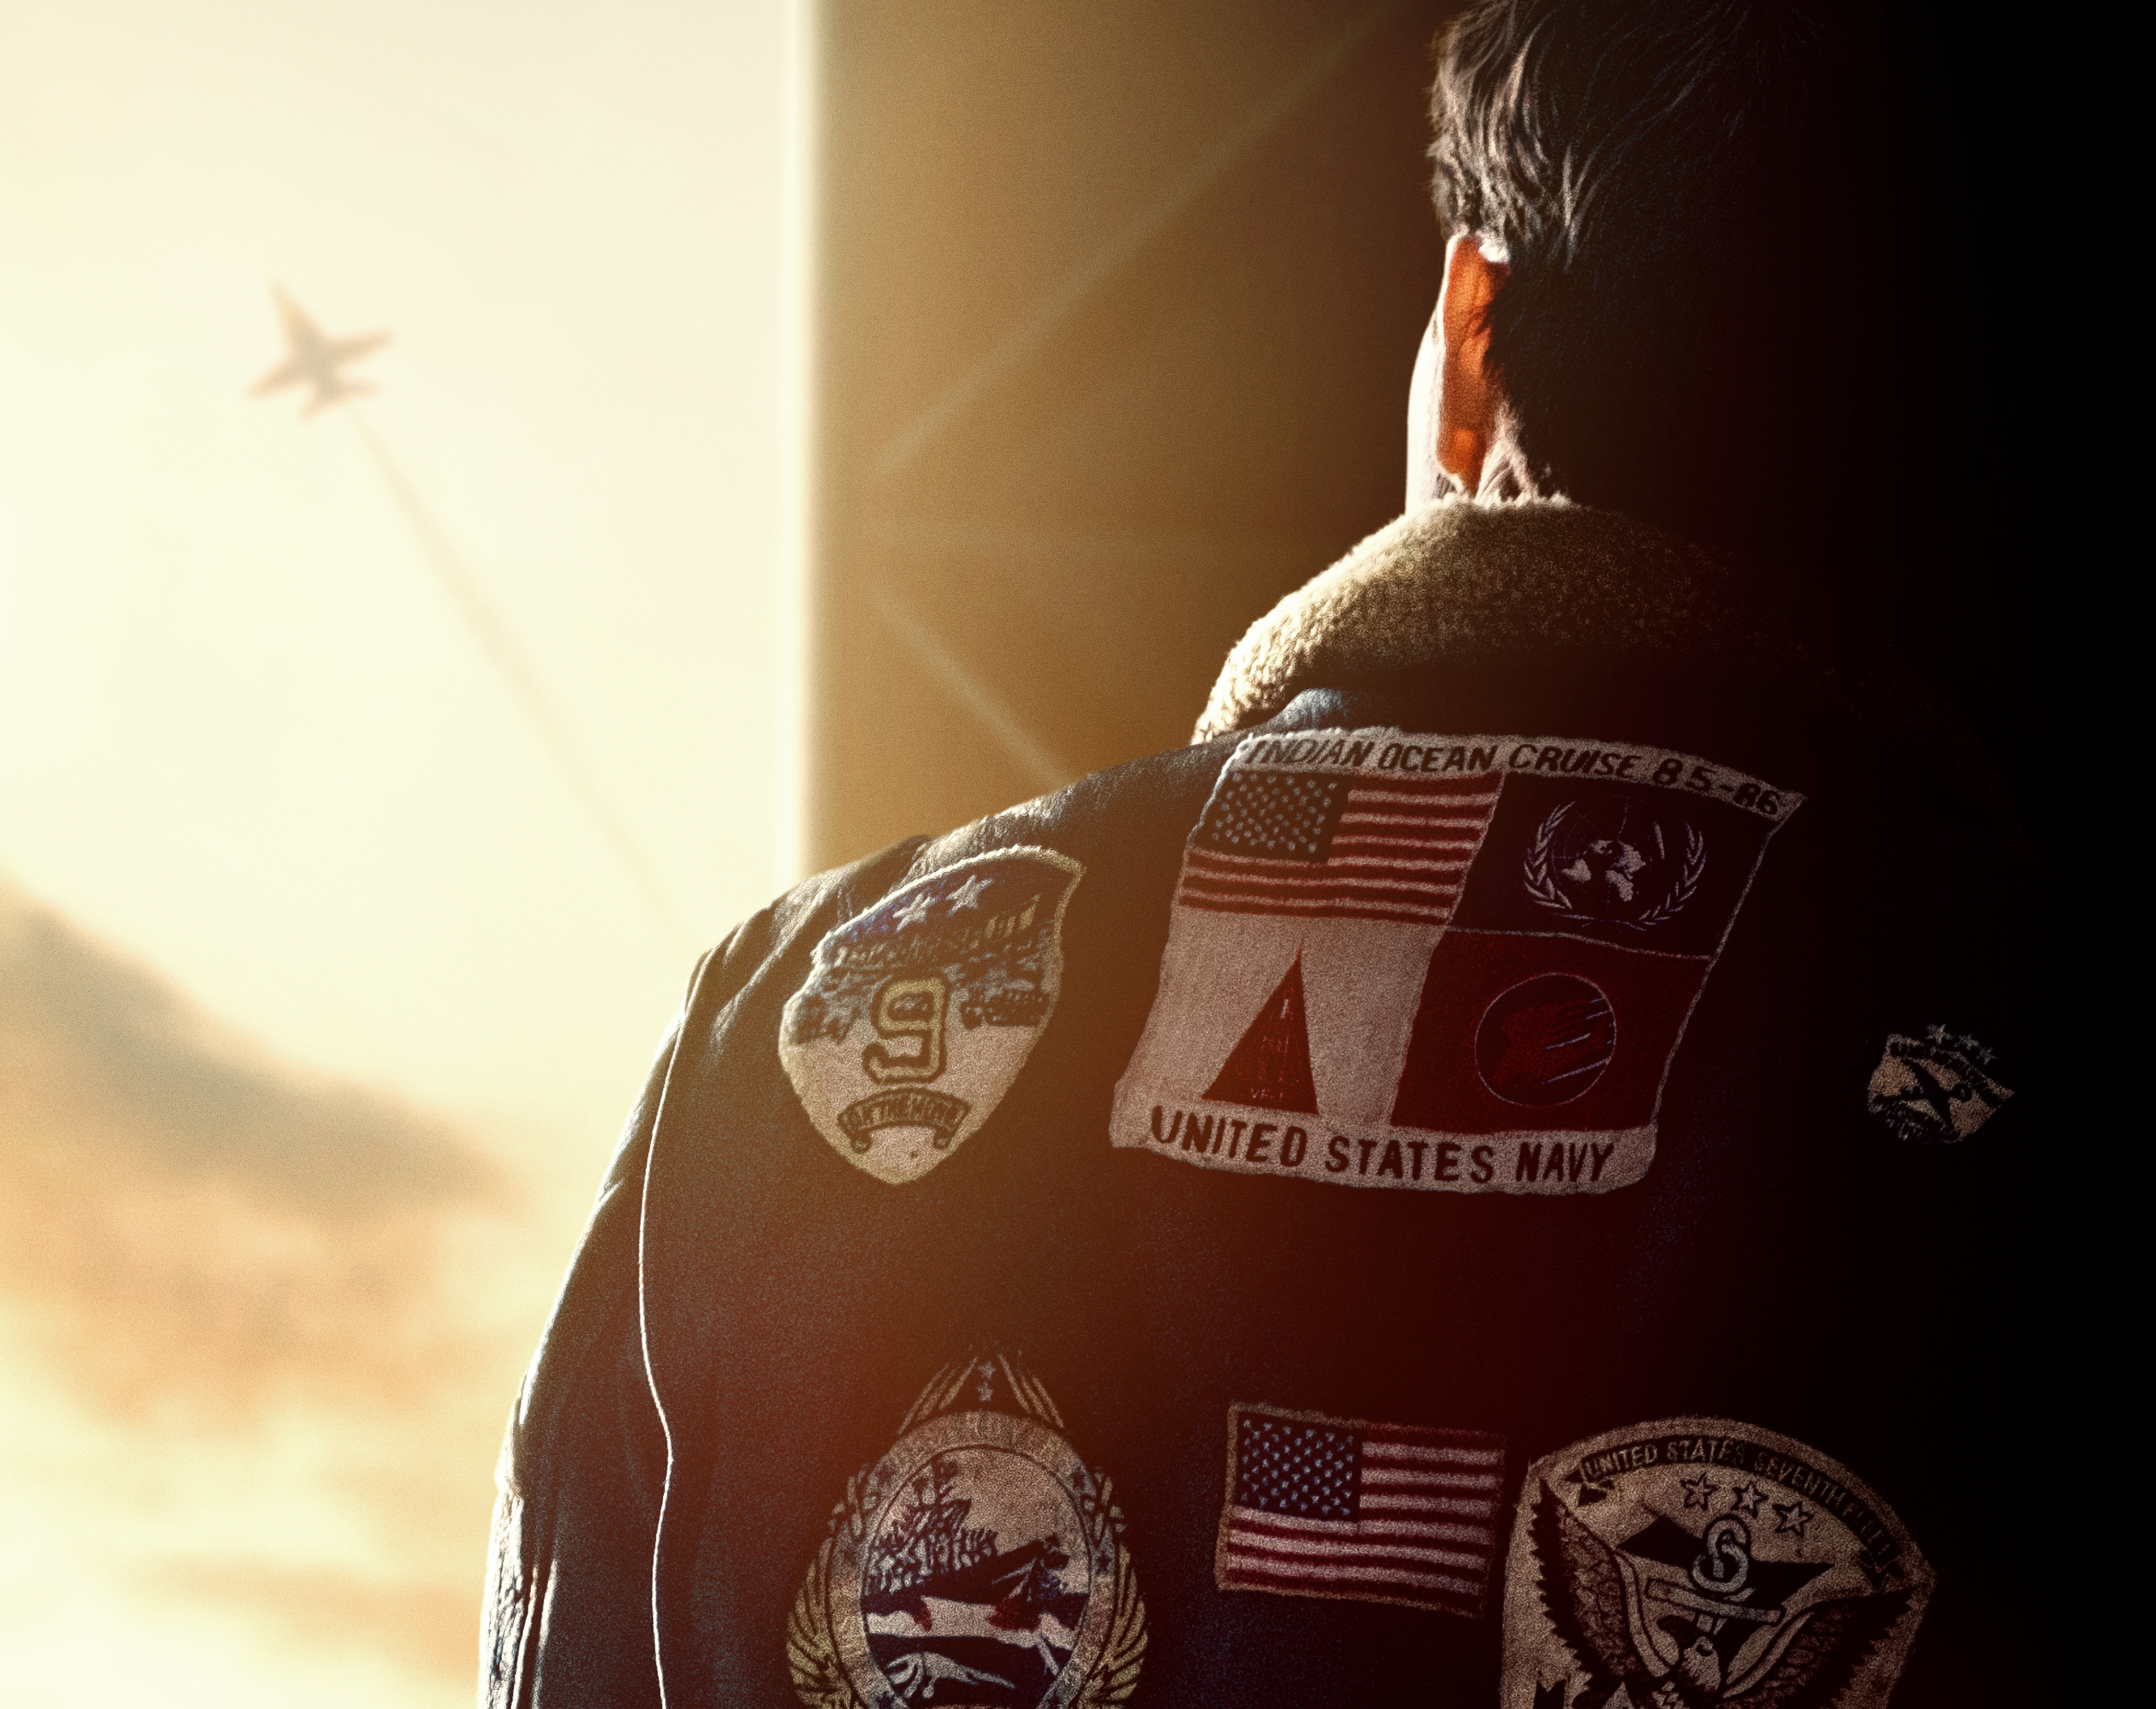 Movie Top Gun: Maverick HD Wallpaper | Background Image